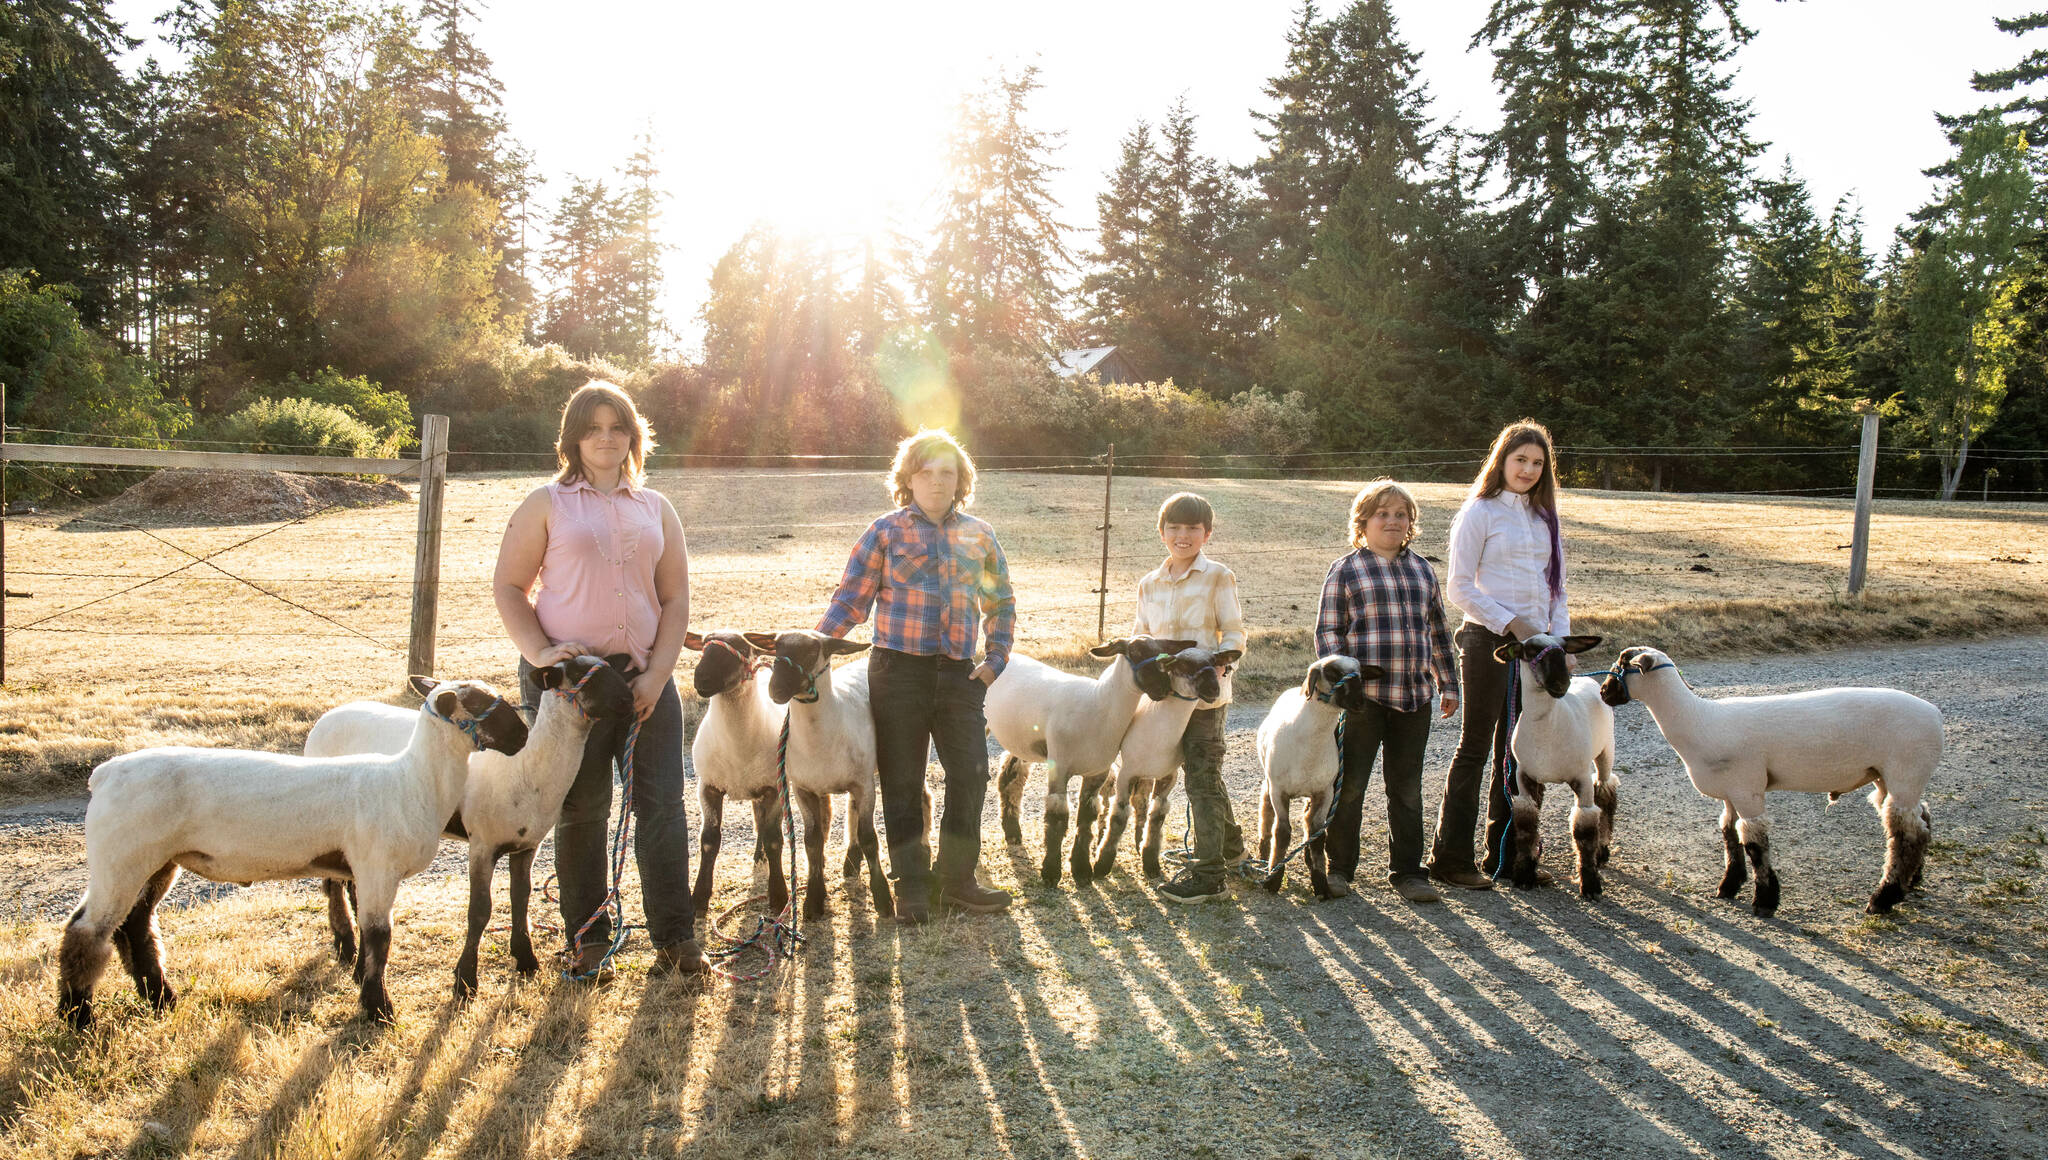 From left, Lilly Kline, Lucas Kline, Deegan Kline, Logan Brown and Sofia Brown with their market lambs. (Photo by Heather Kline)